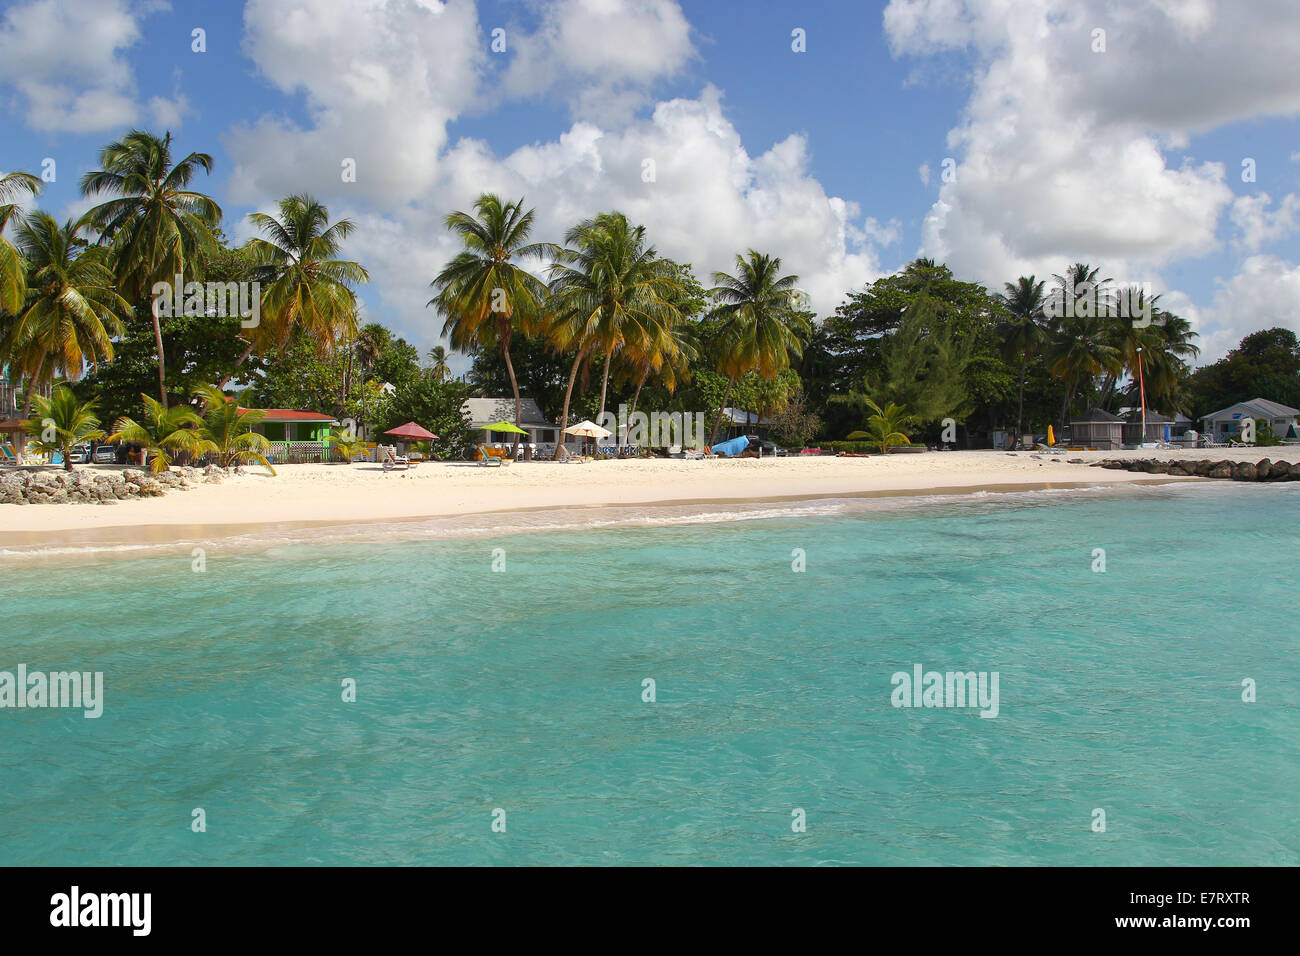 Caribbean beach, Palm Trees, Blue Sky, Stock Photo